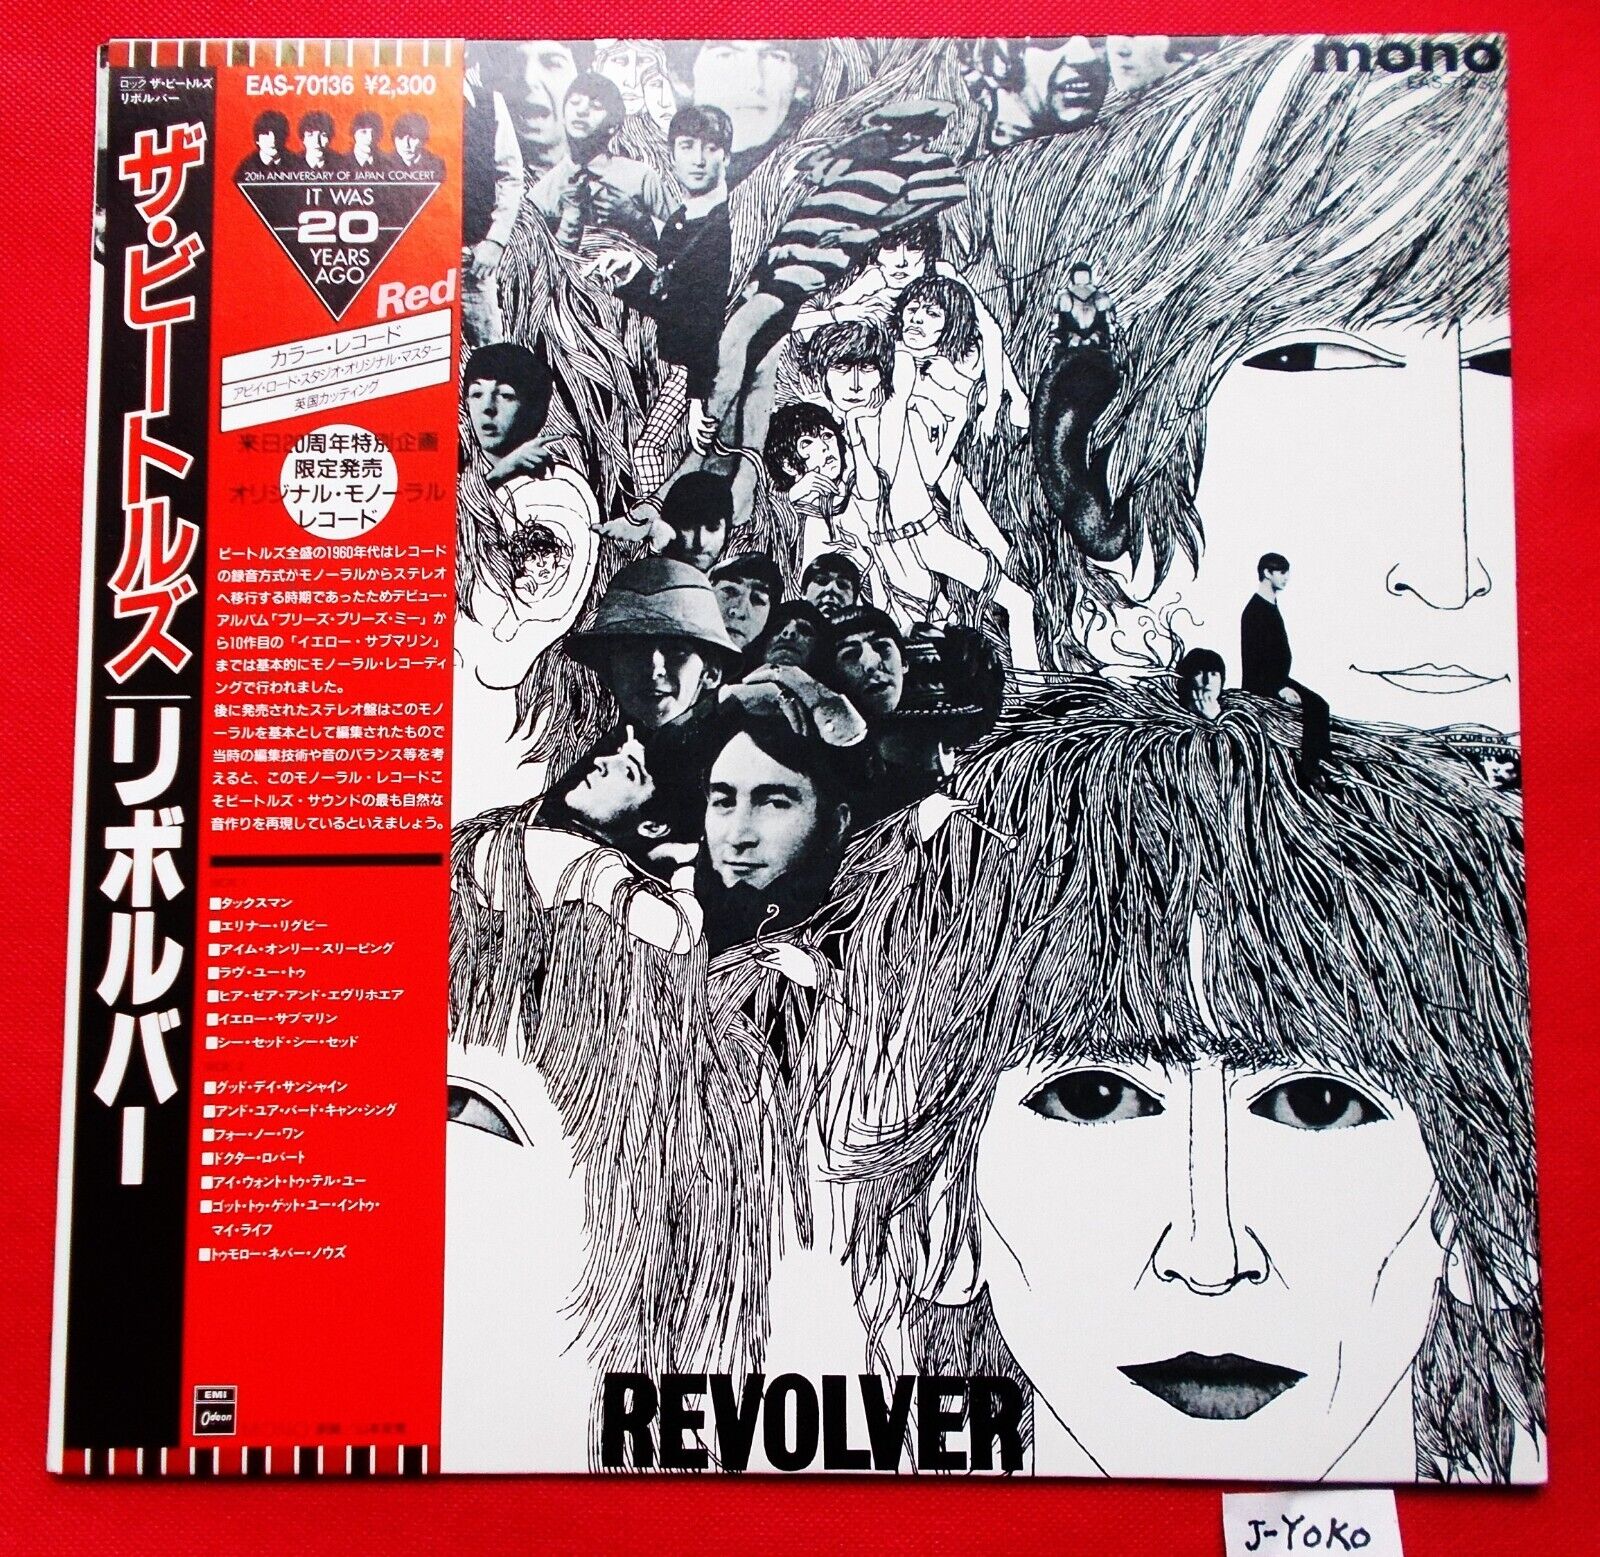 The Beatles Revolver EAS-70136 Red Color Vinyl Record LP OBI Japan JPN